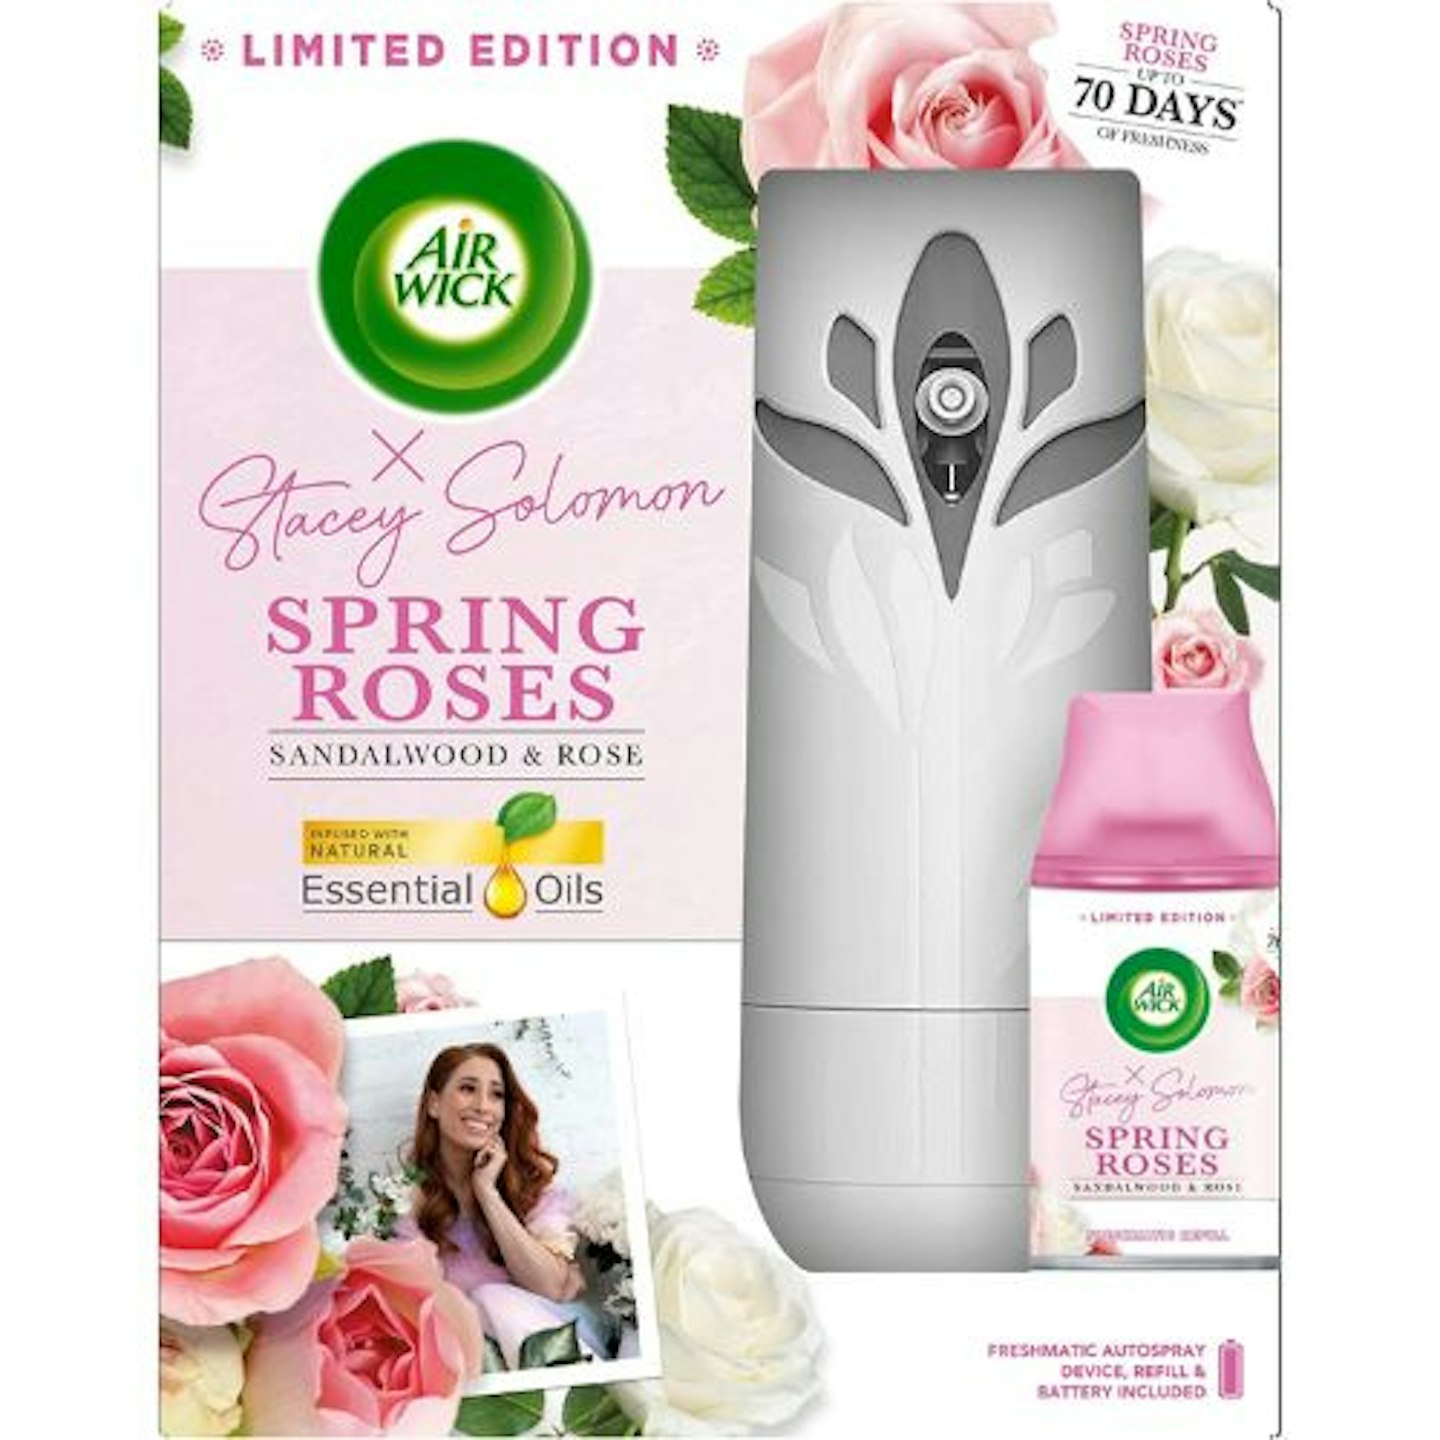 Air Wick Spring Roses Freshmatic Autospray Kit